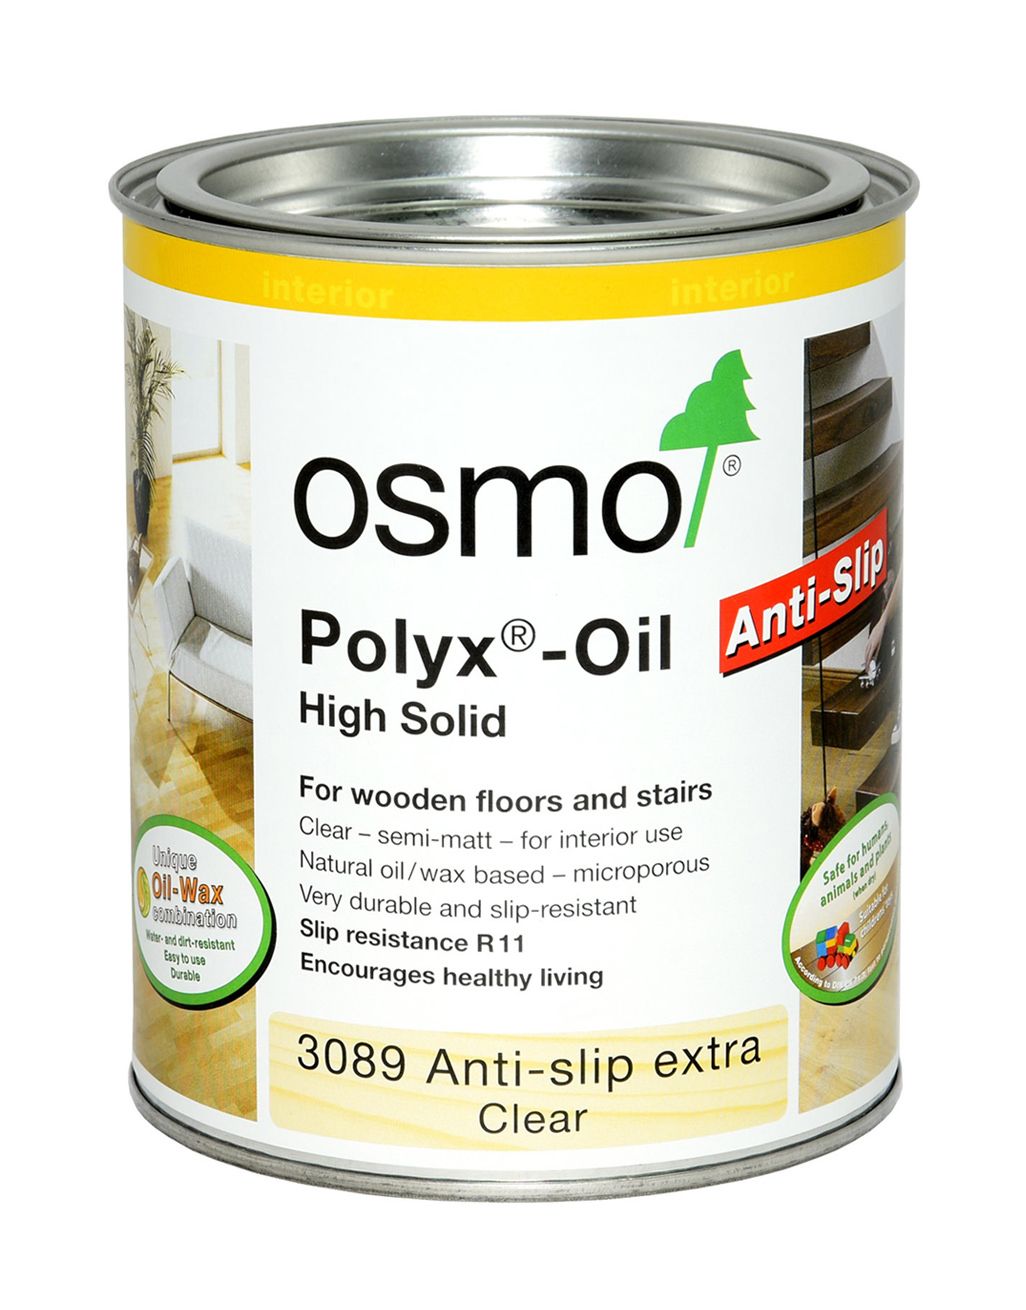 Osmo Polyx Oil Anti Slip Extra clear 3089 1